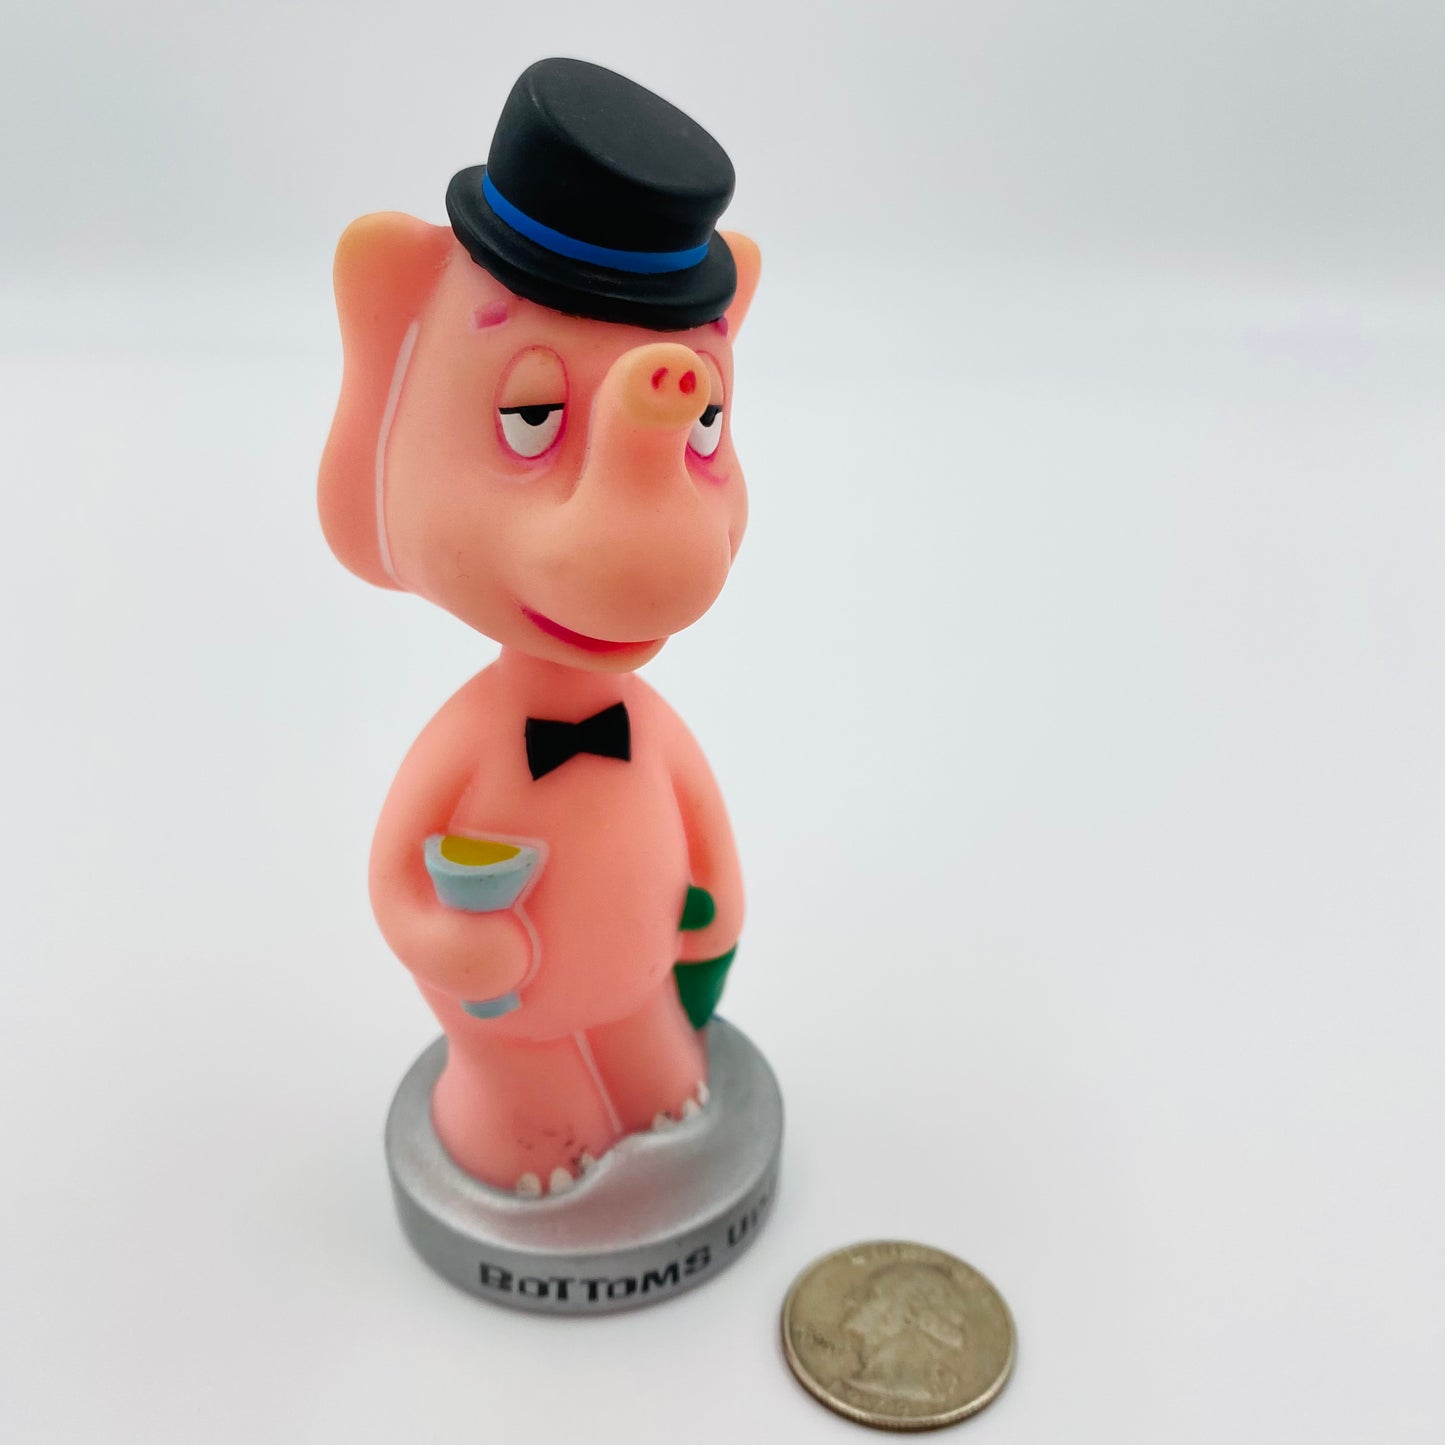 Wacky Wobbler Wacky Wisecracks “Bottoms Up!” Pink Elephant loose mini-bobblehead (2003) Funko